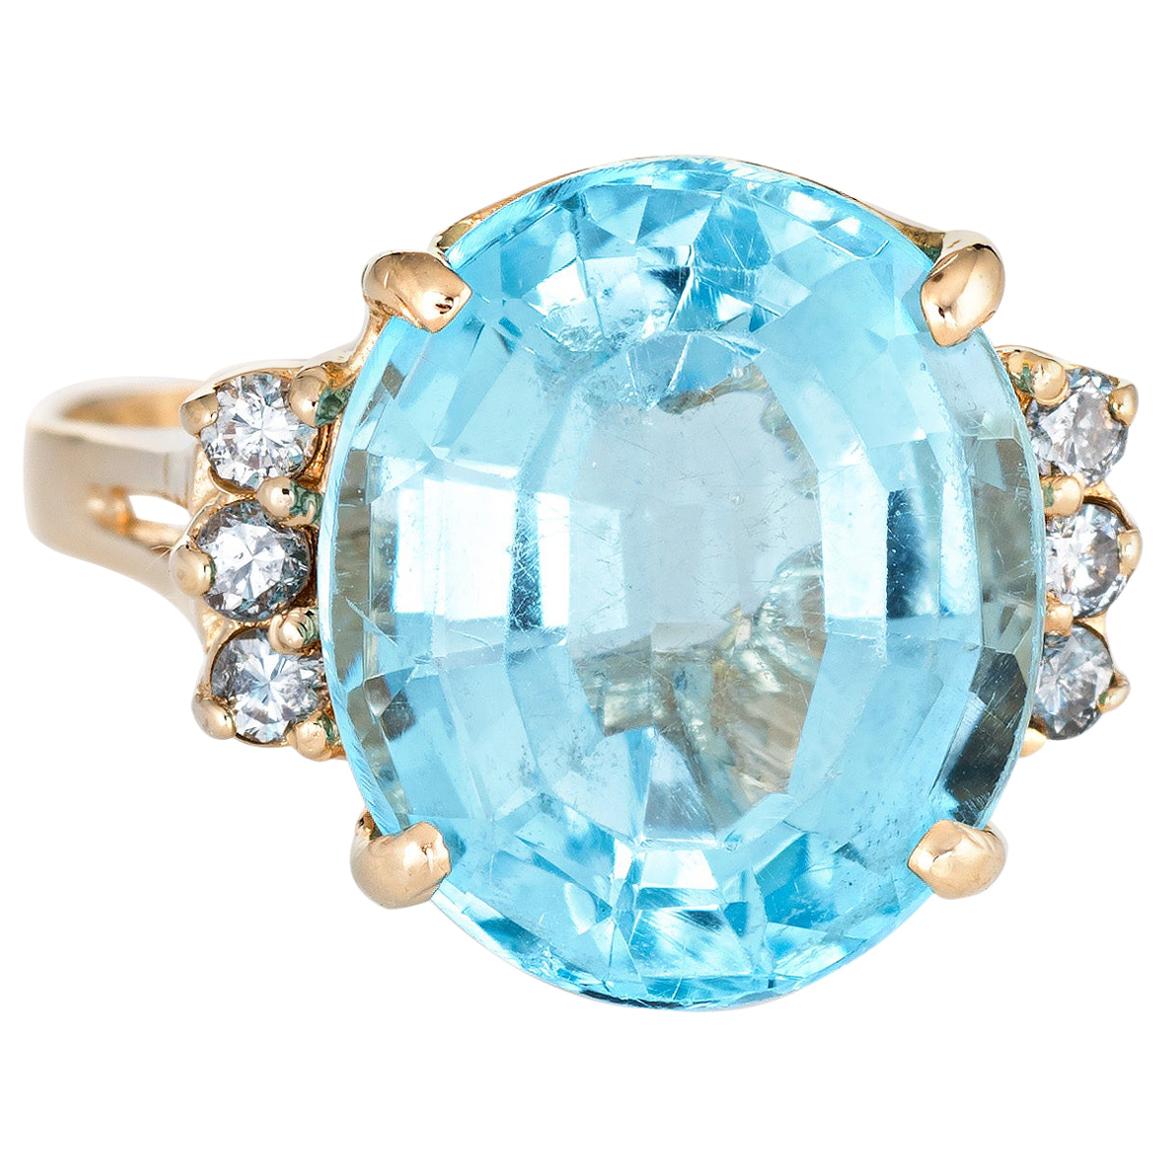 12 Carat Blue Topaz Diamond Ring Estate 14 Karat Gold Oval Cut Cocktail Jewelry